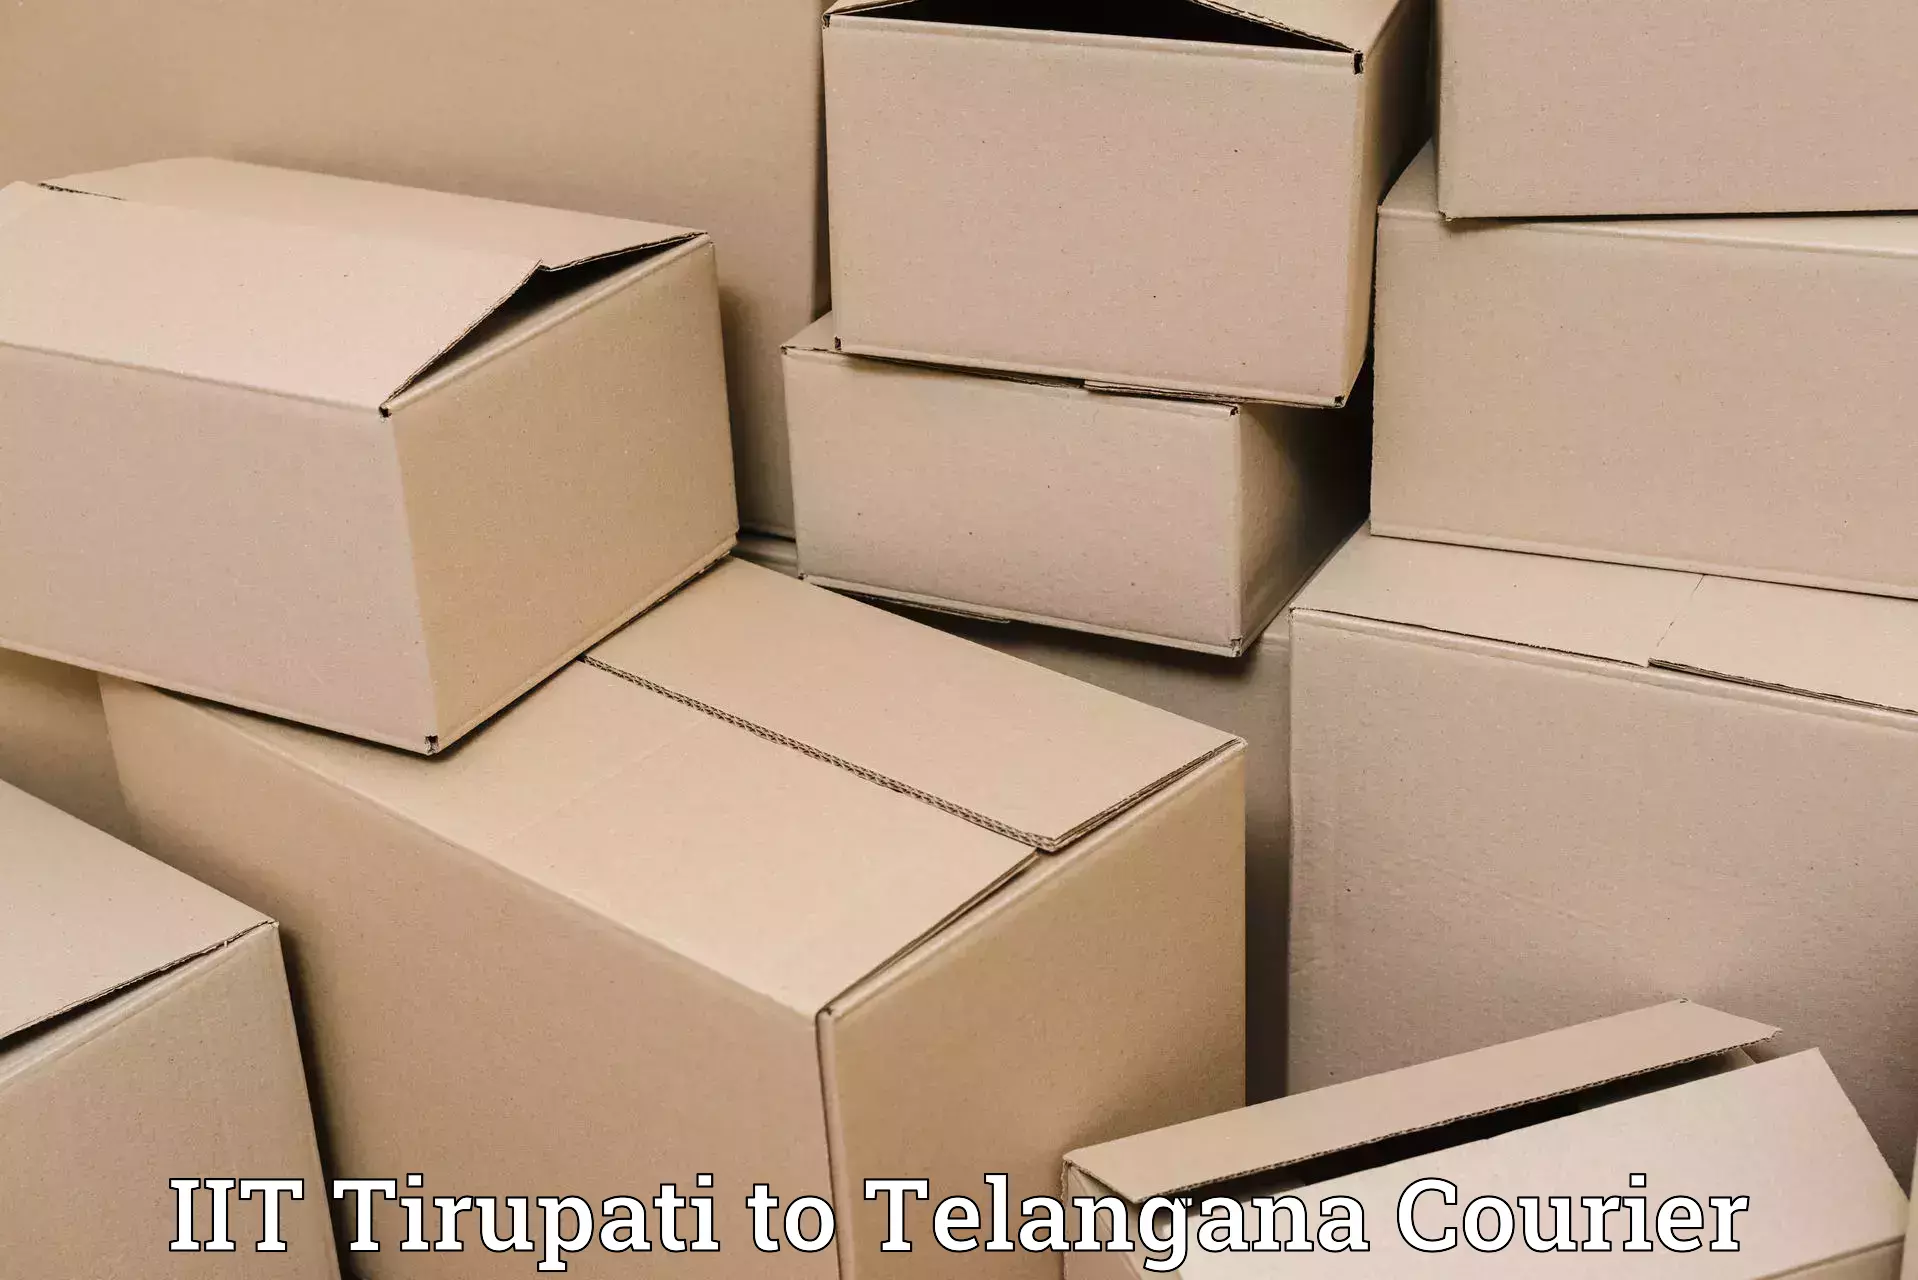 Courier service comparison IIT Tirupati to Mahabub Nagar